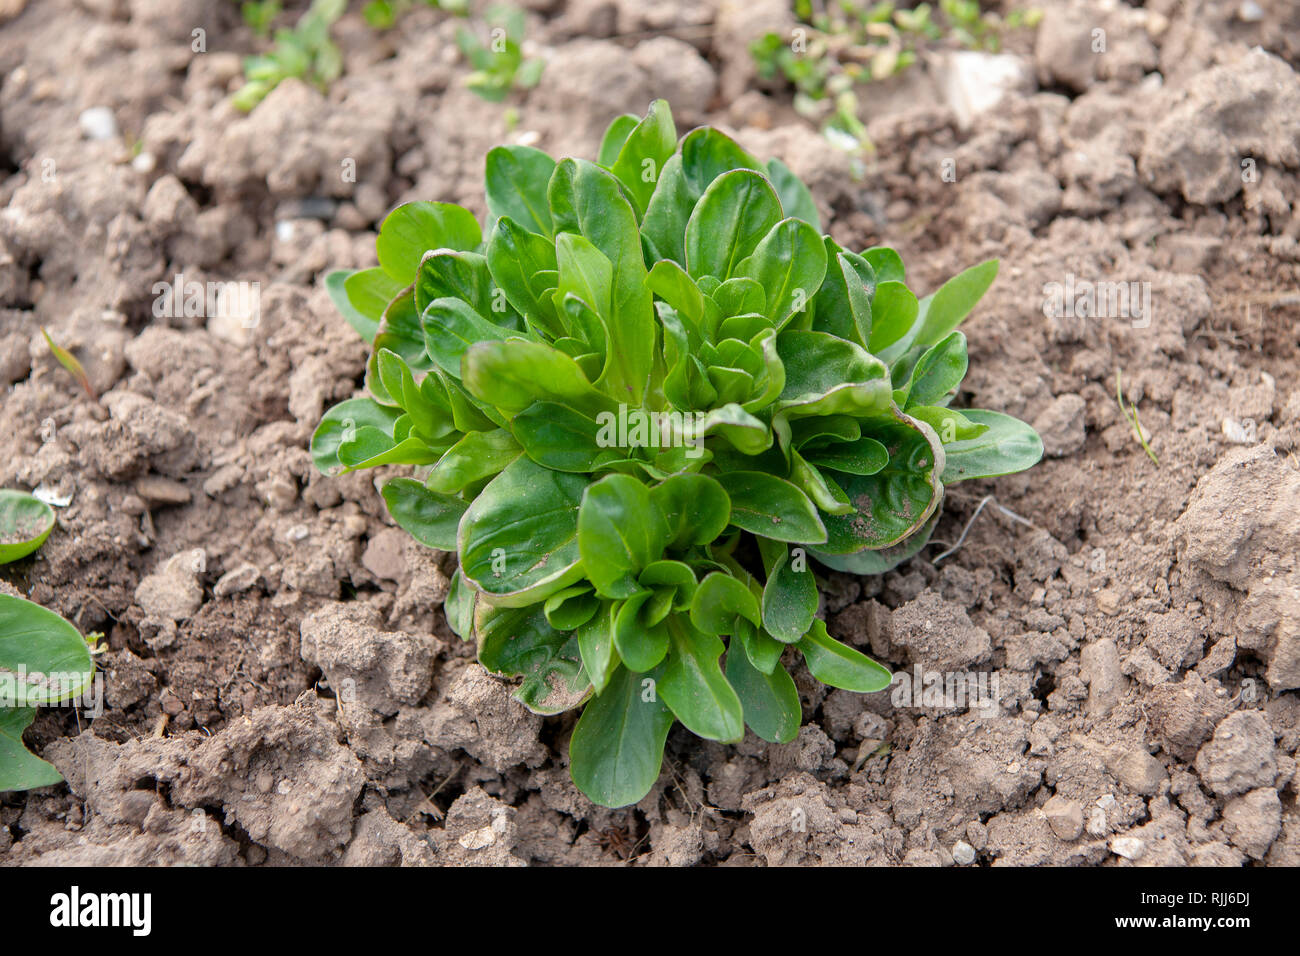 Corn Salad, Lamb's Lattuce (Valerianella locusta) in a garden bed, ready to cut. Germany Stock Photo